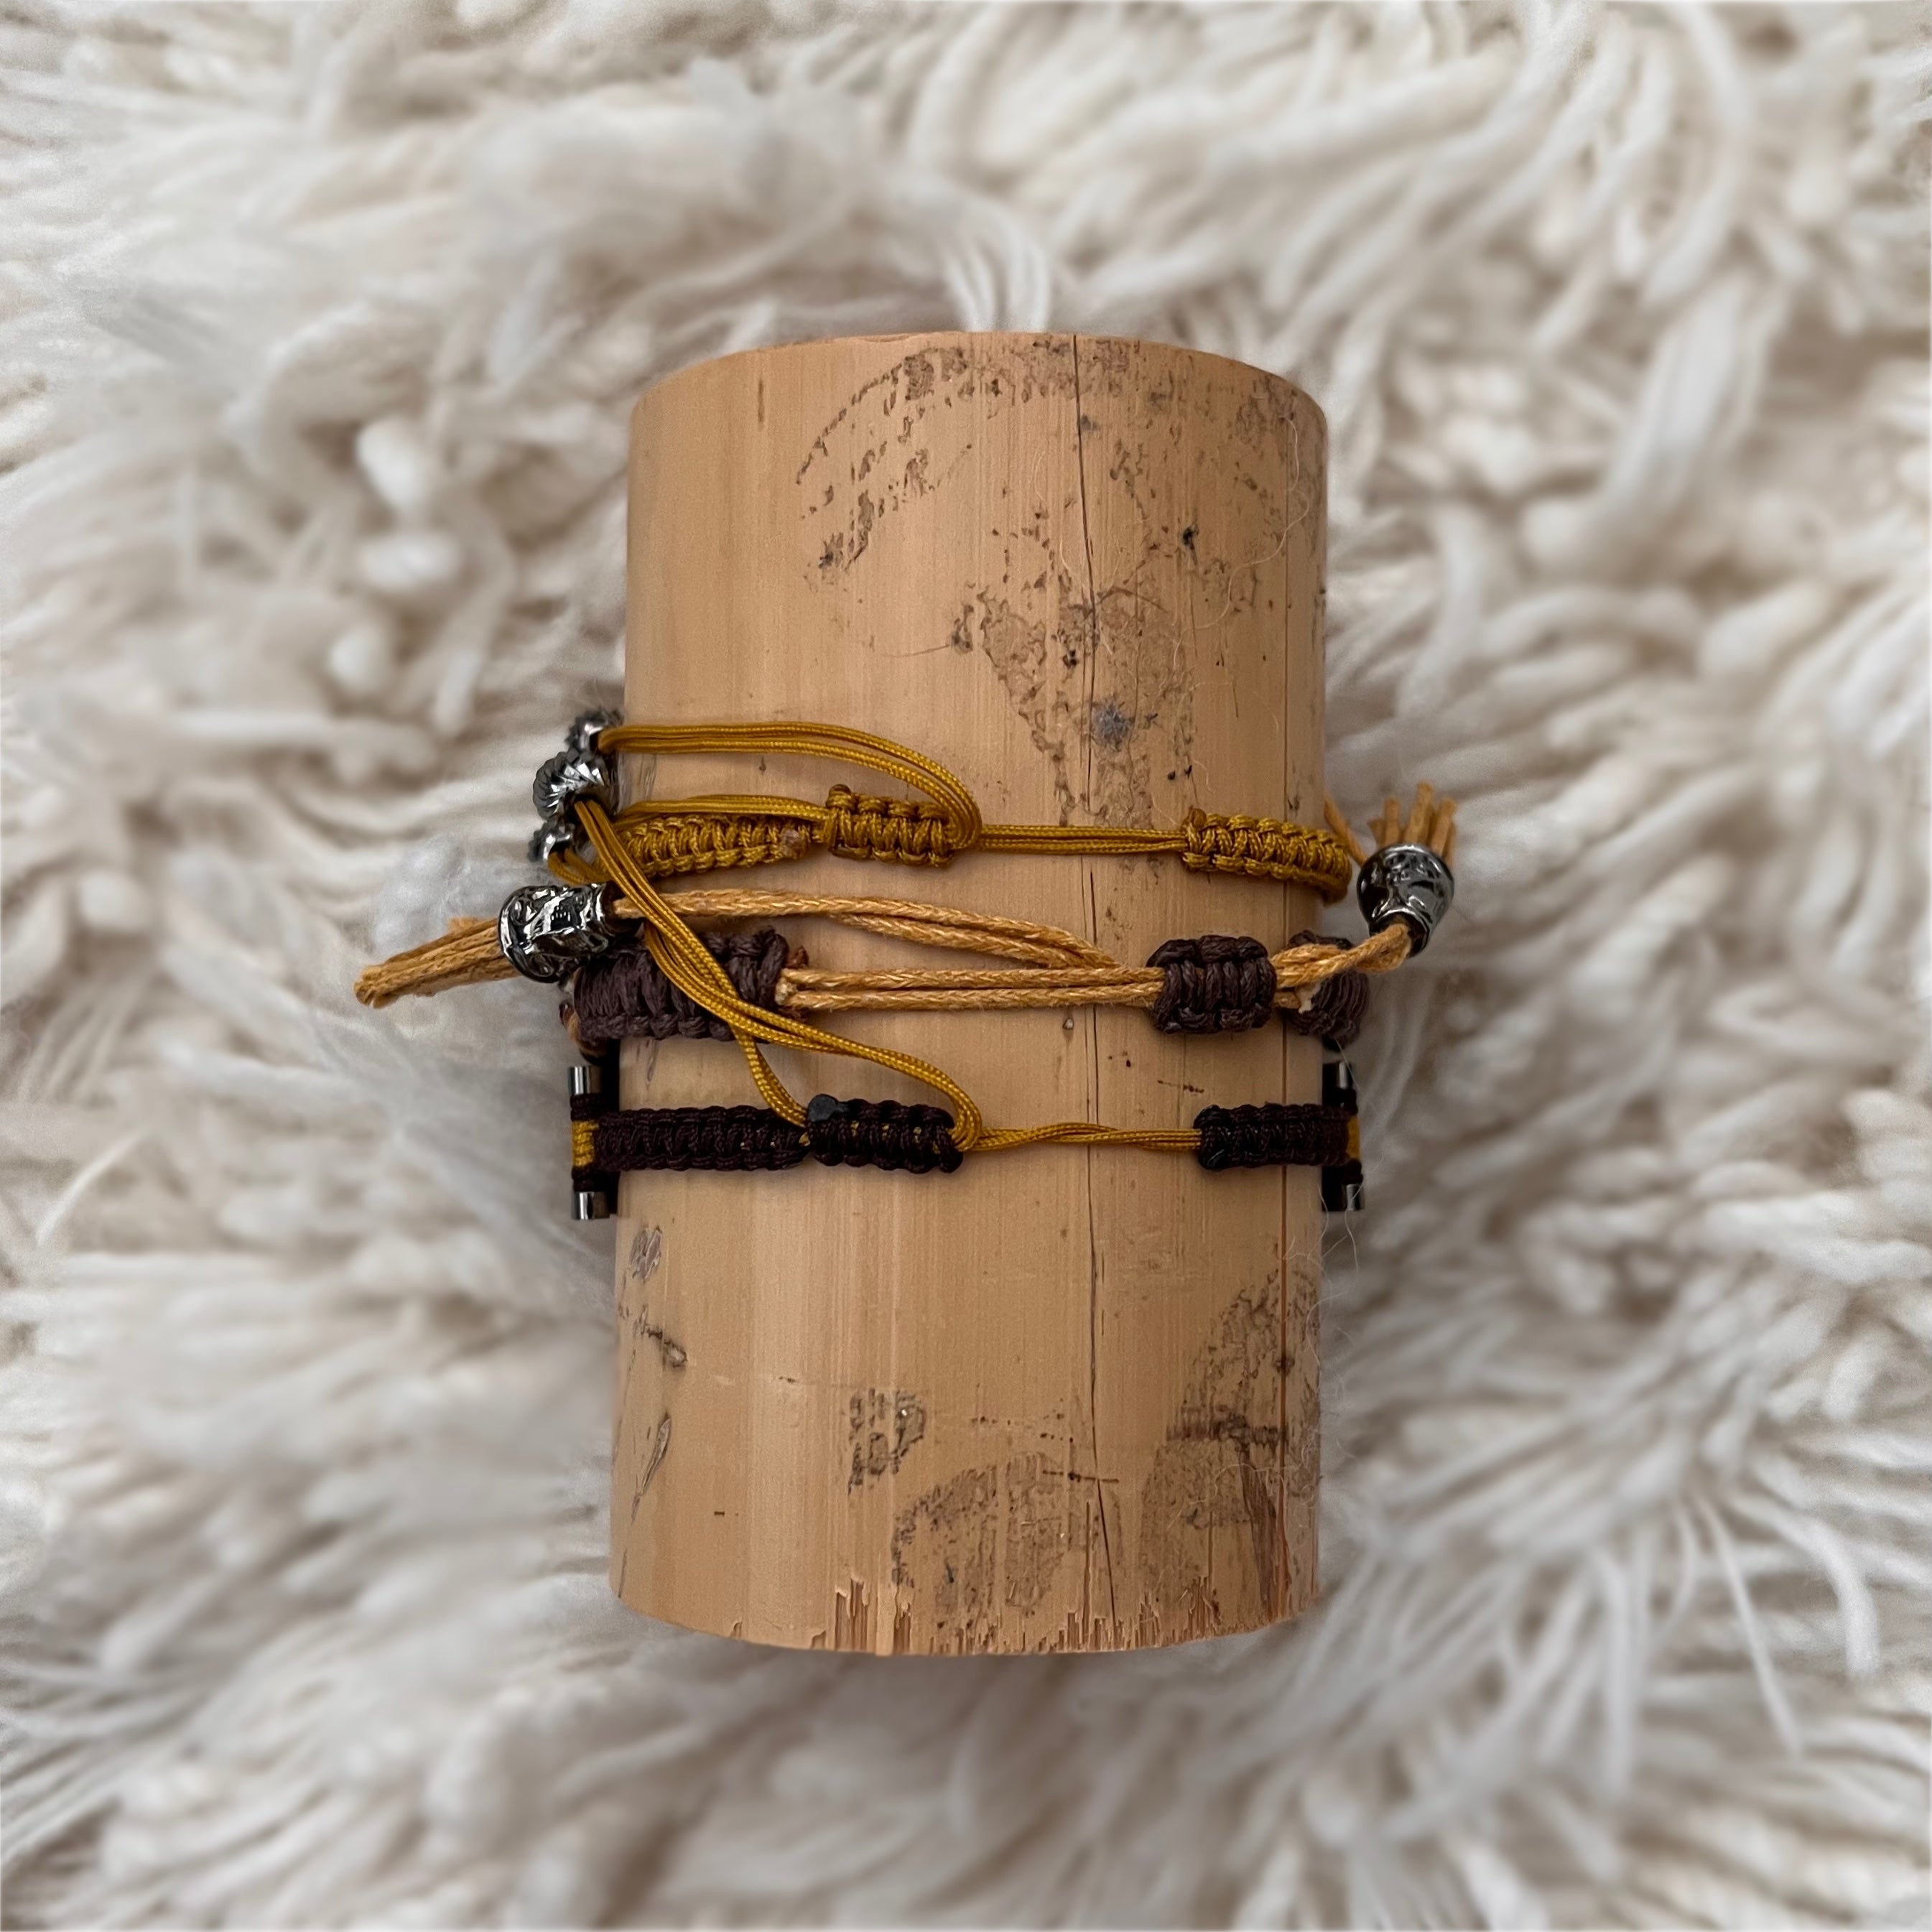 Cold Brew: Macrame String Bracelet Set